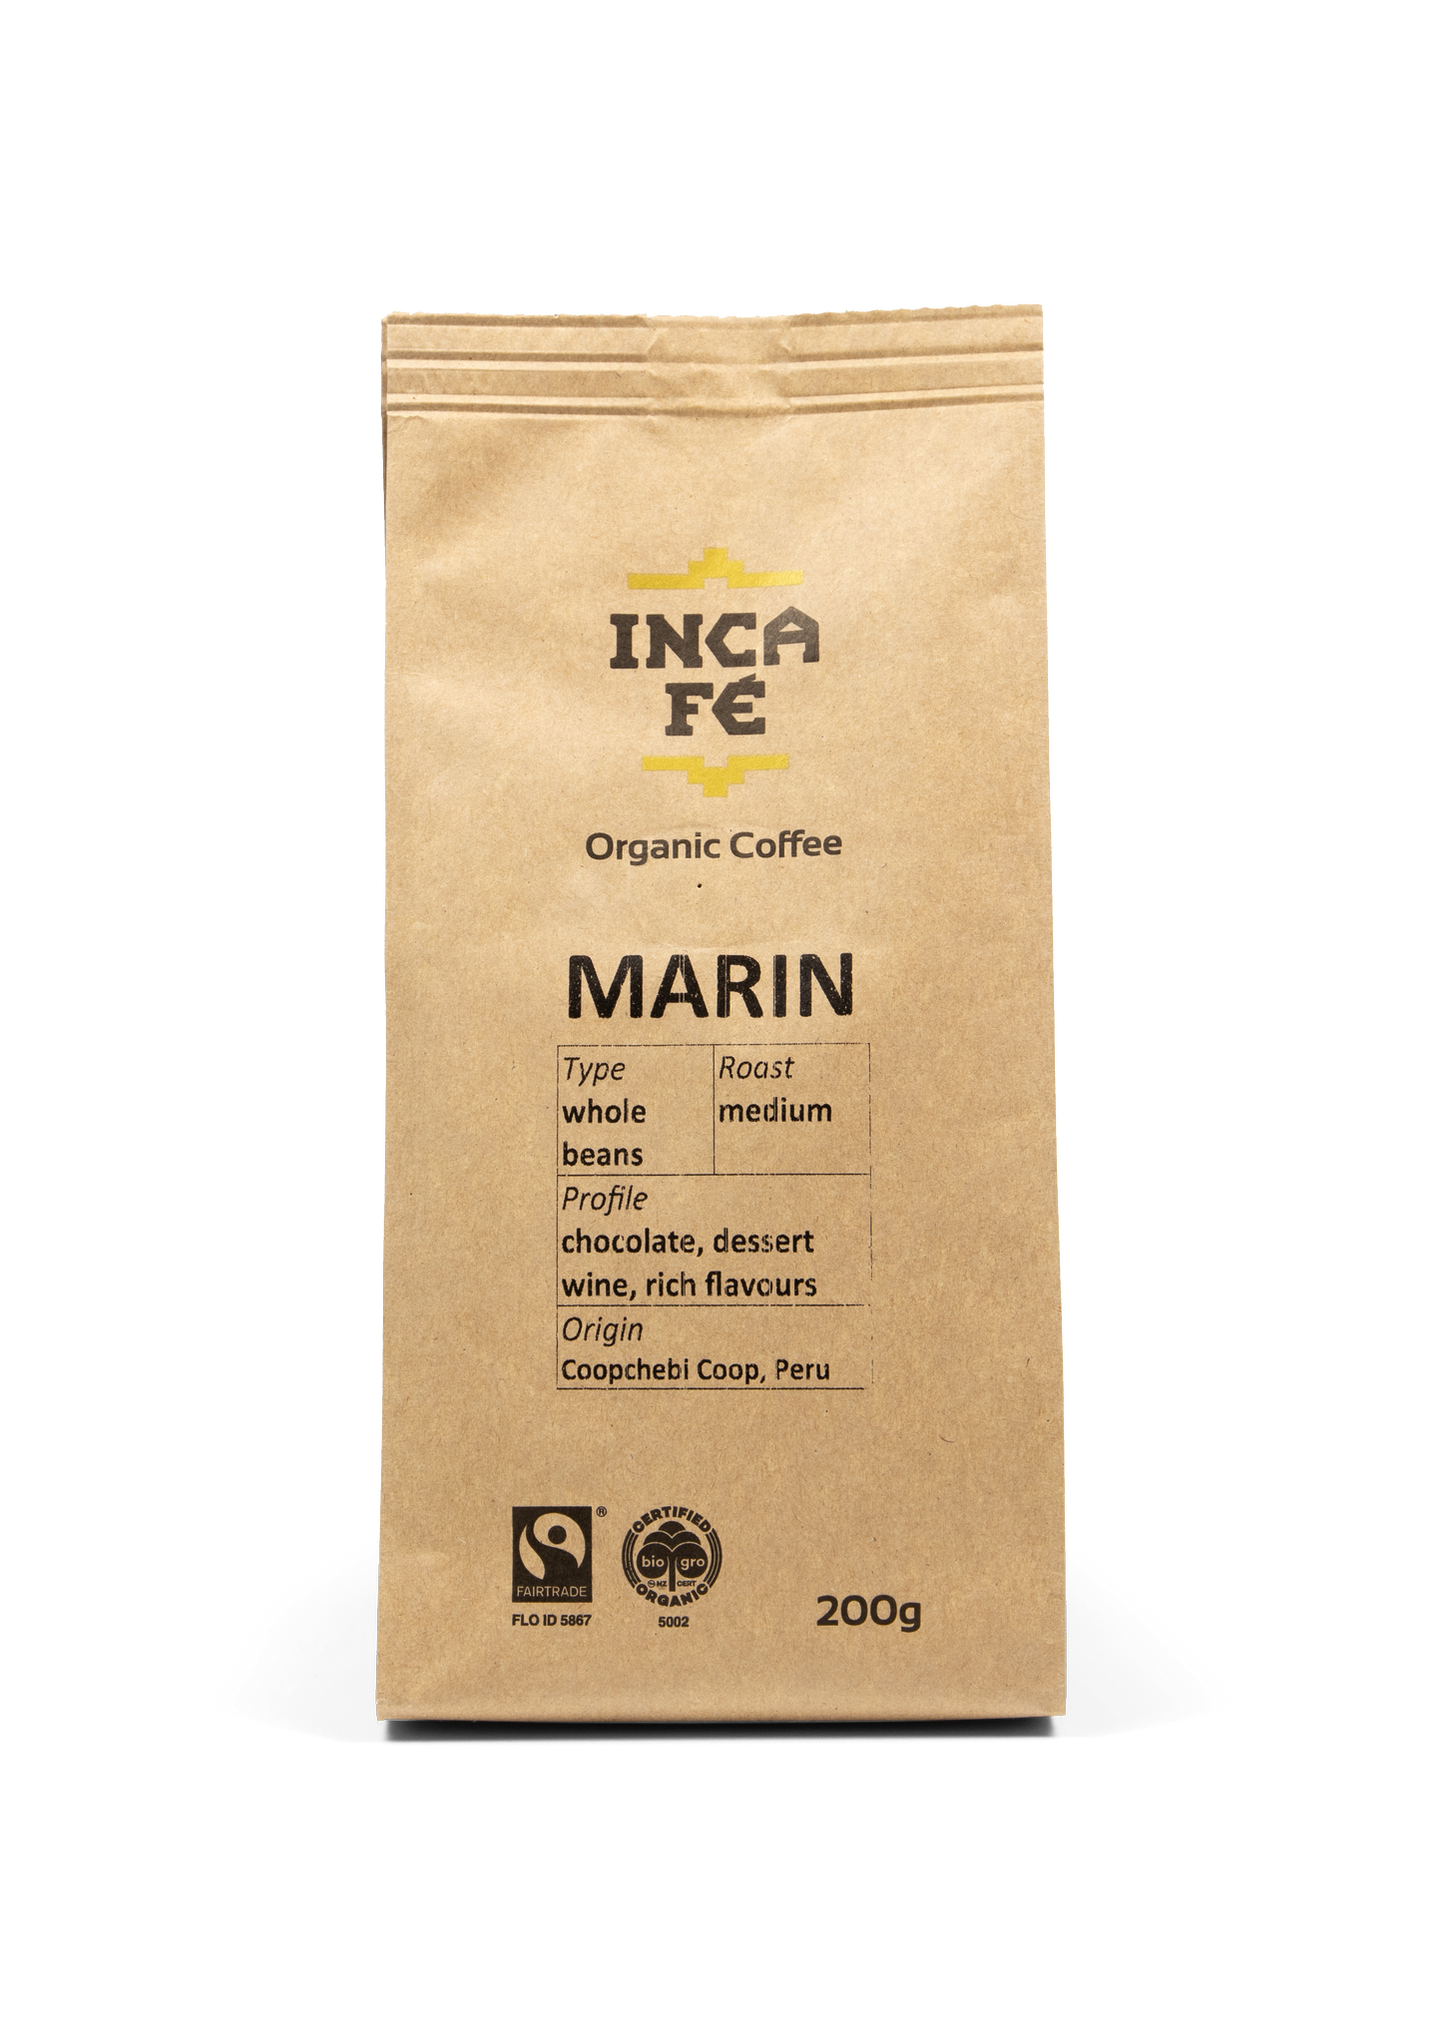 IncaFe Marin Estate Coffee Beans - 200g